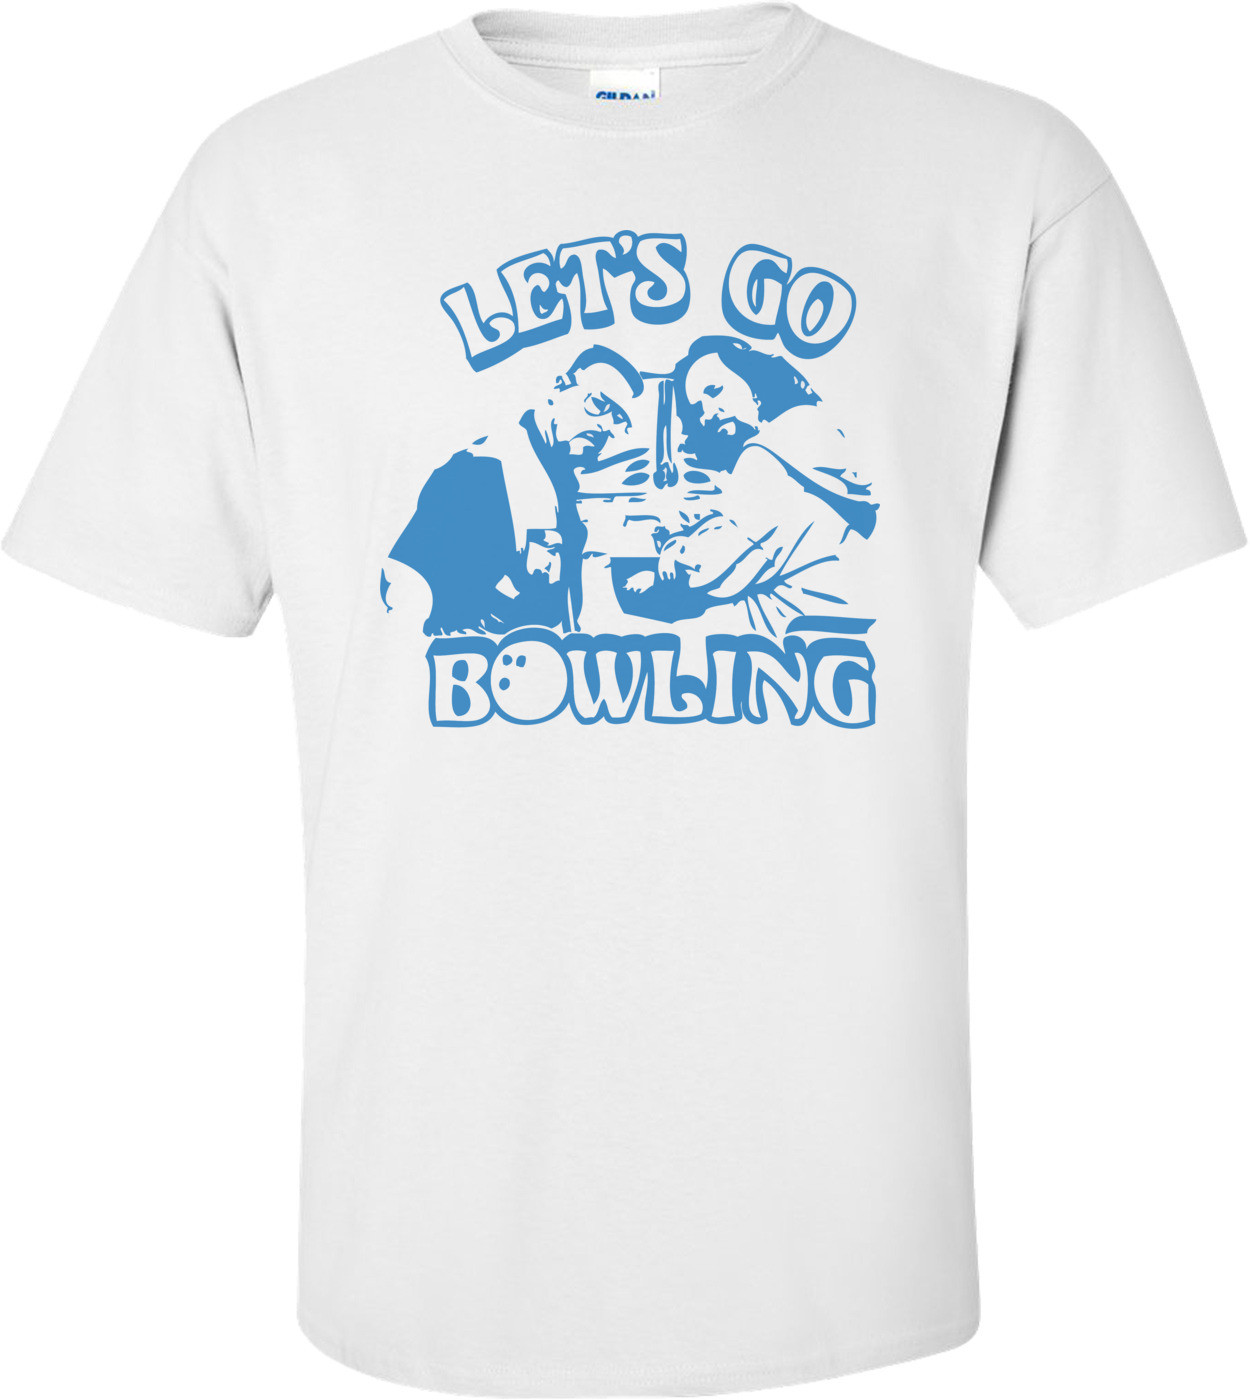 The Big Lebowski  Lets Go Bowling  Tee Shirt